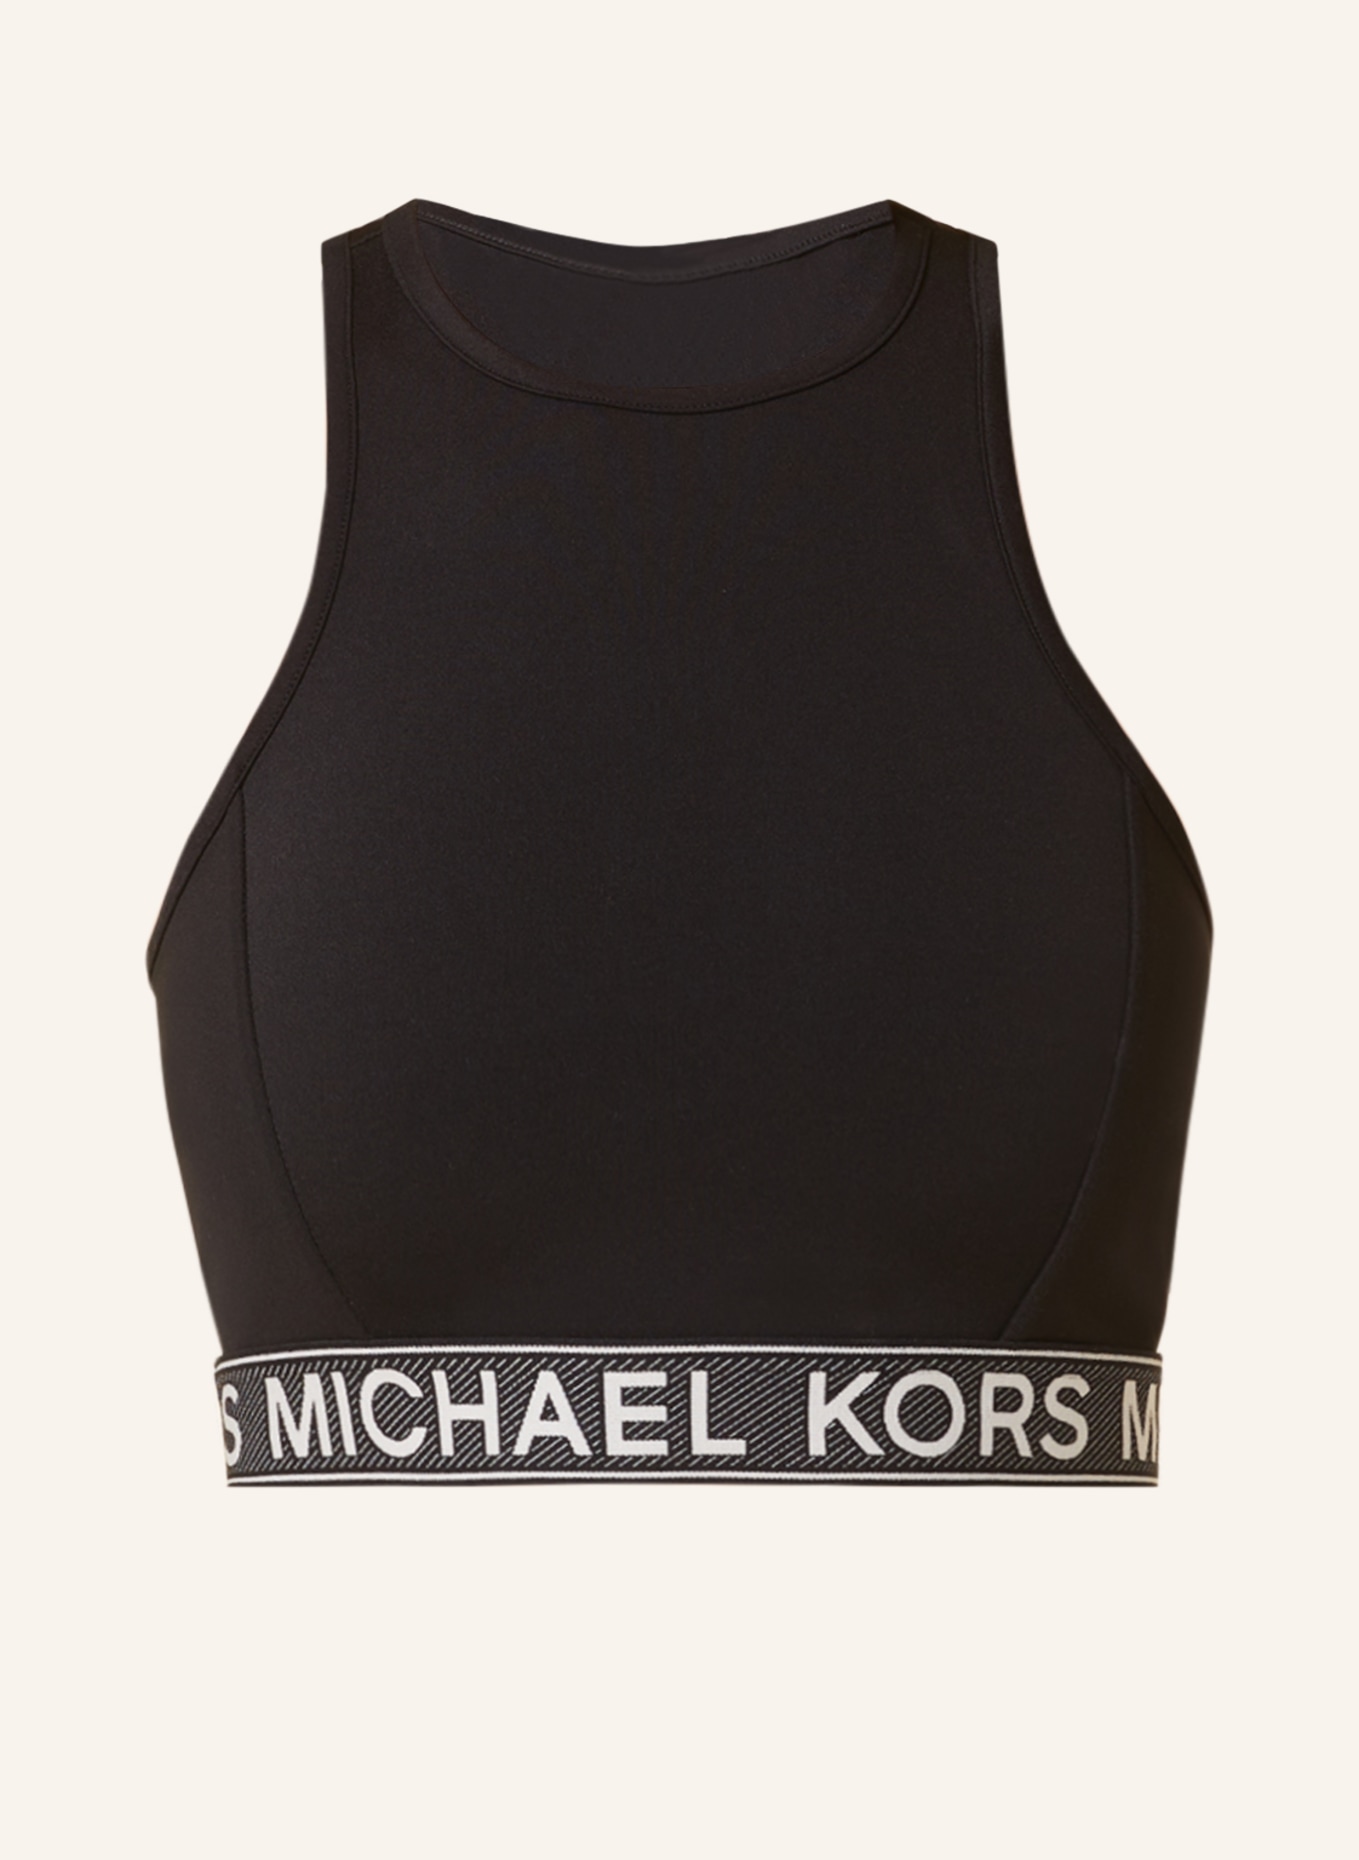 MICHAEL KORS Cropped top, Color: BLACK (Image 1)